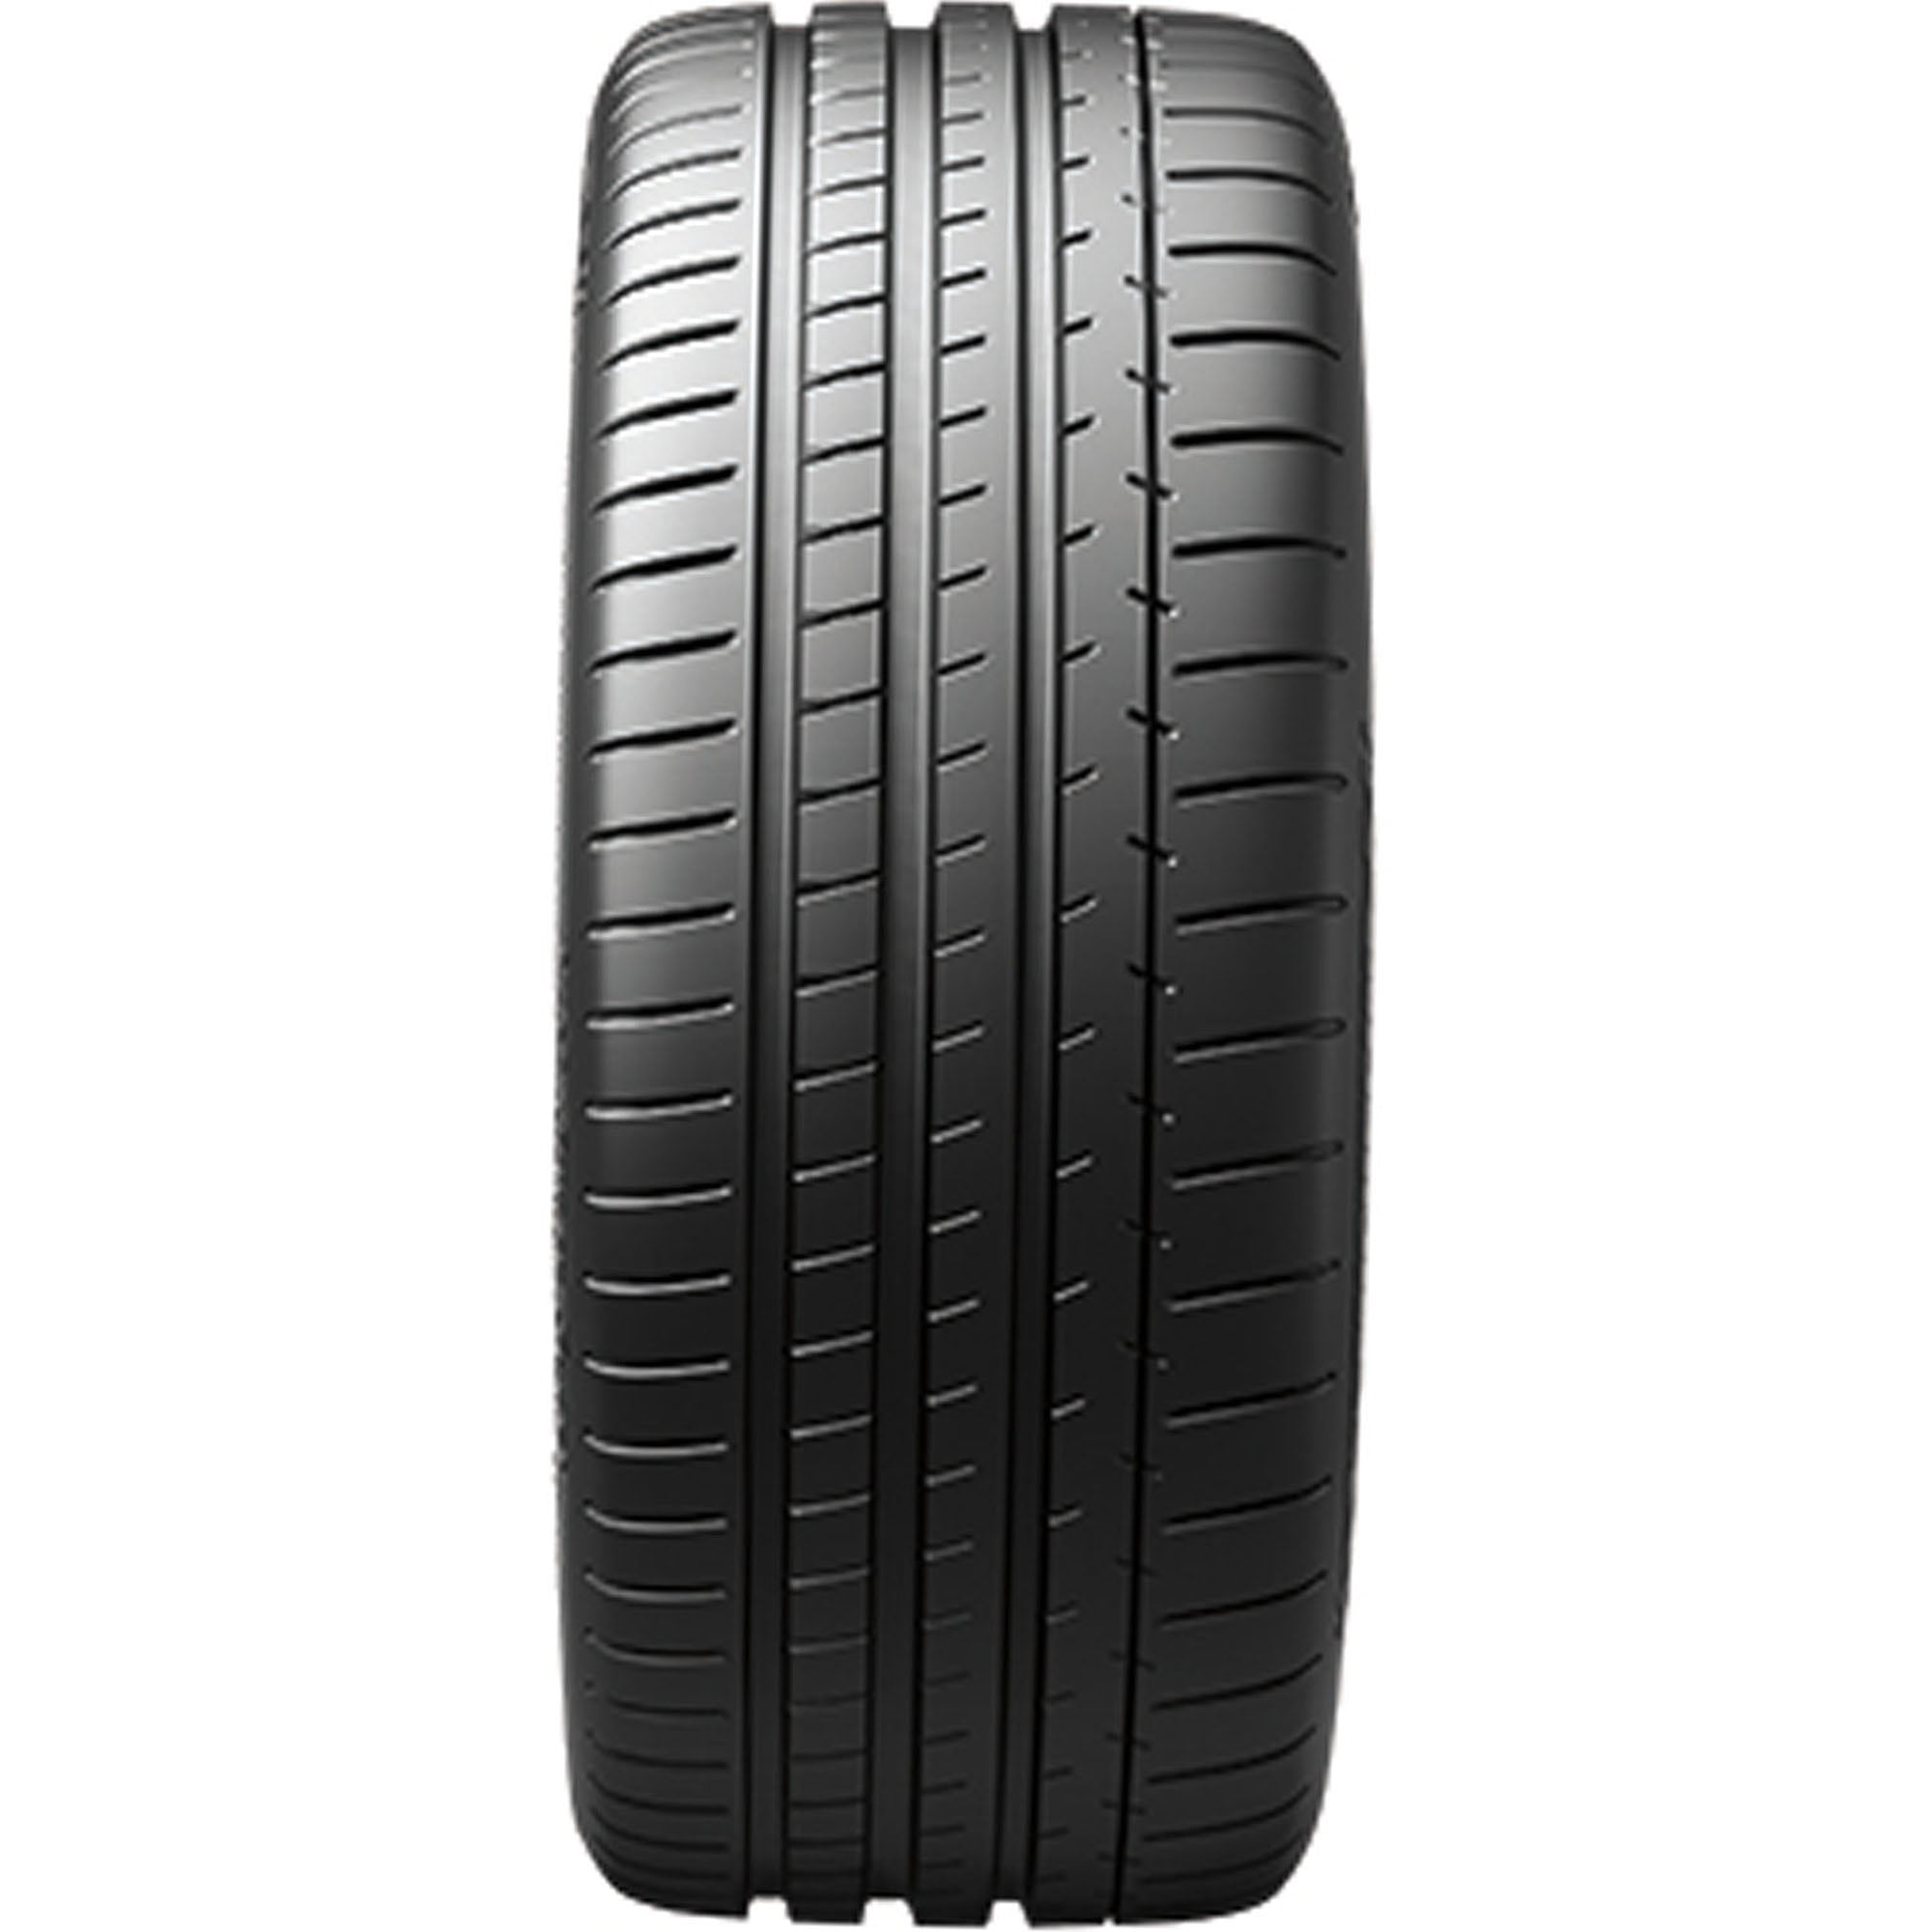 Michelin Pilot Super Sport UHP 255/40ZR20 (101Y) XL Passenger Tire